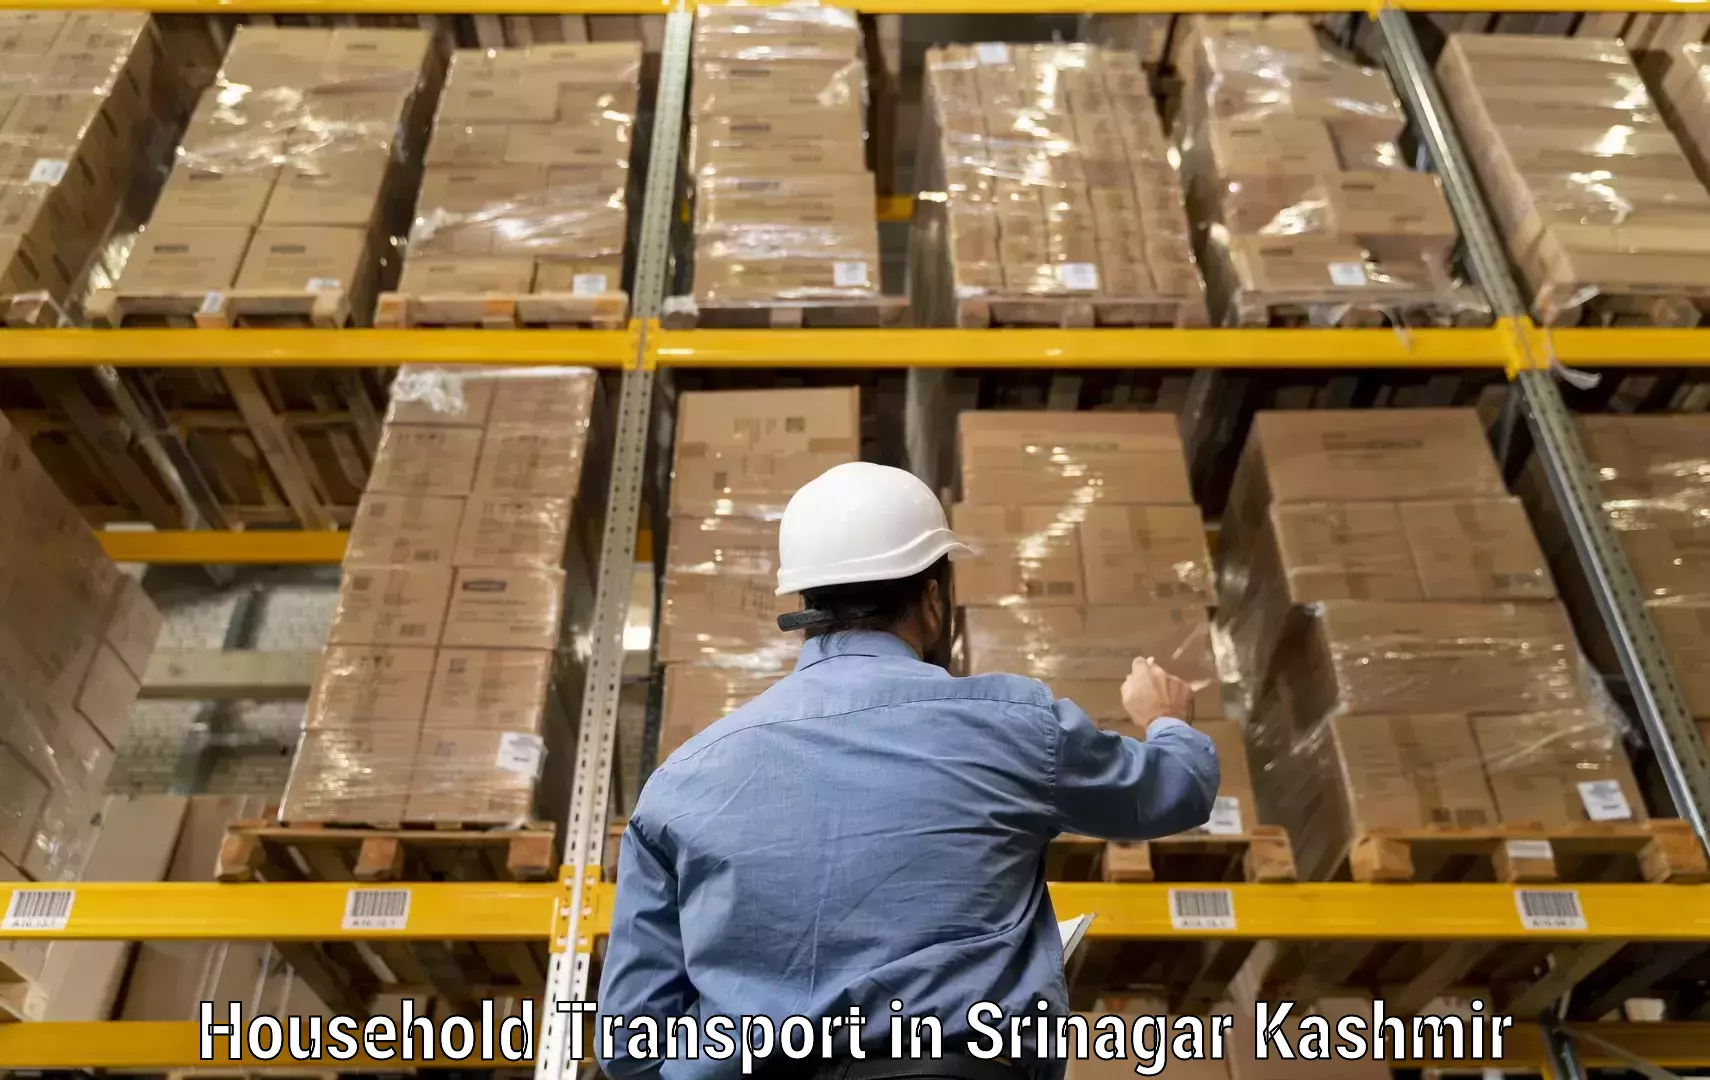 Professional goods transport in Srinagar Kashmir